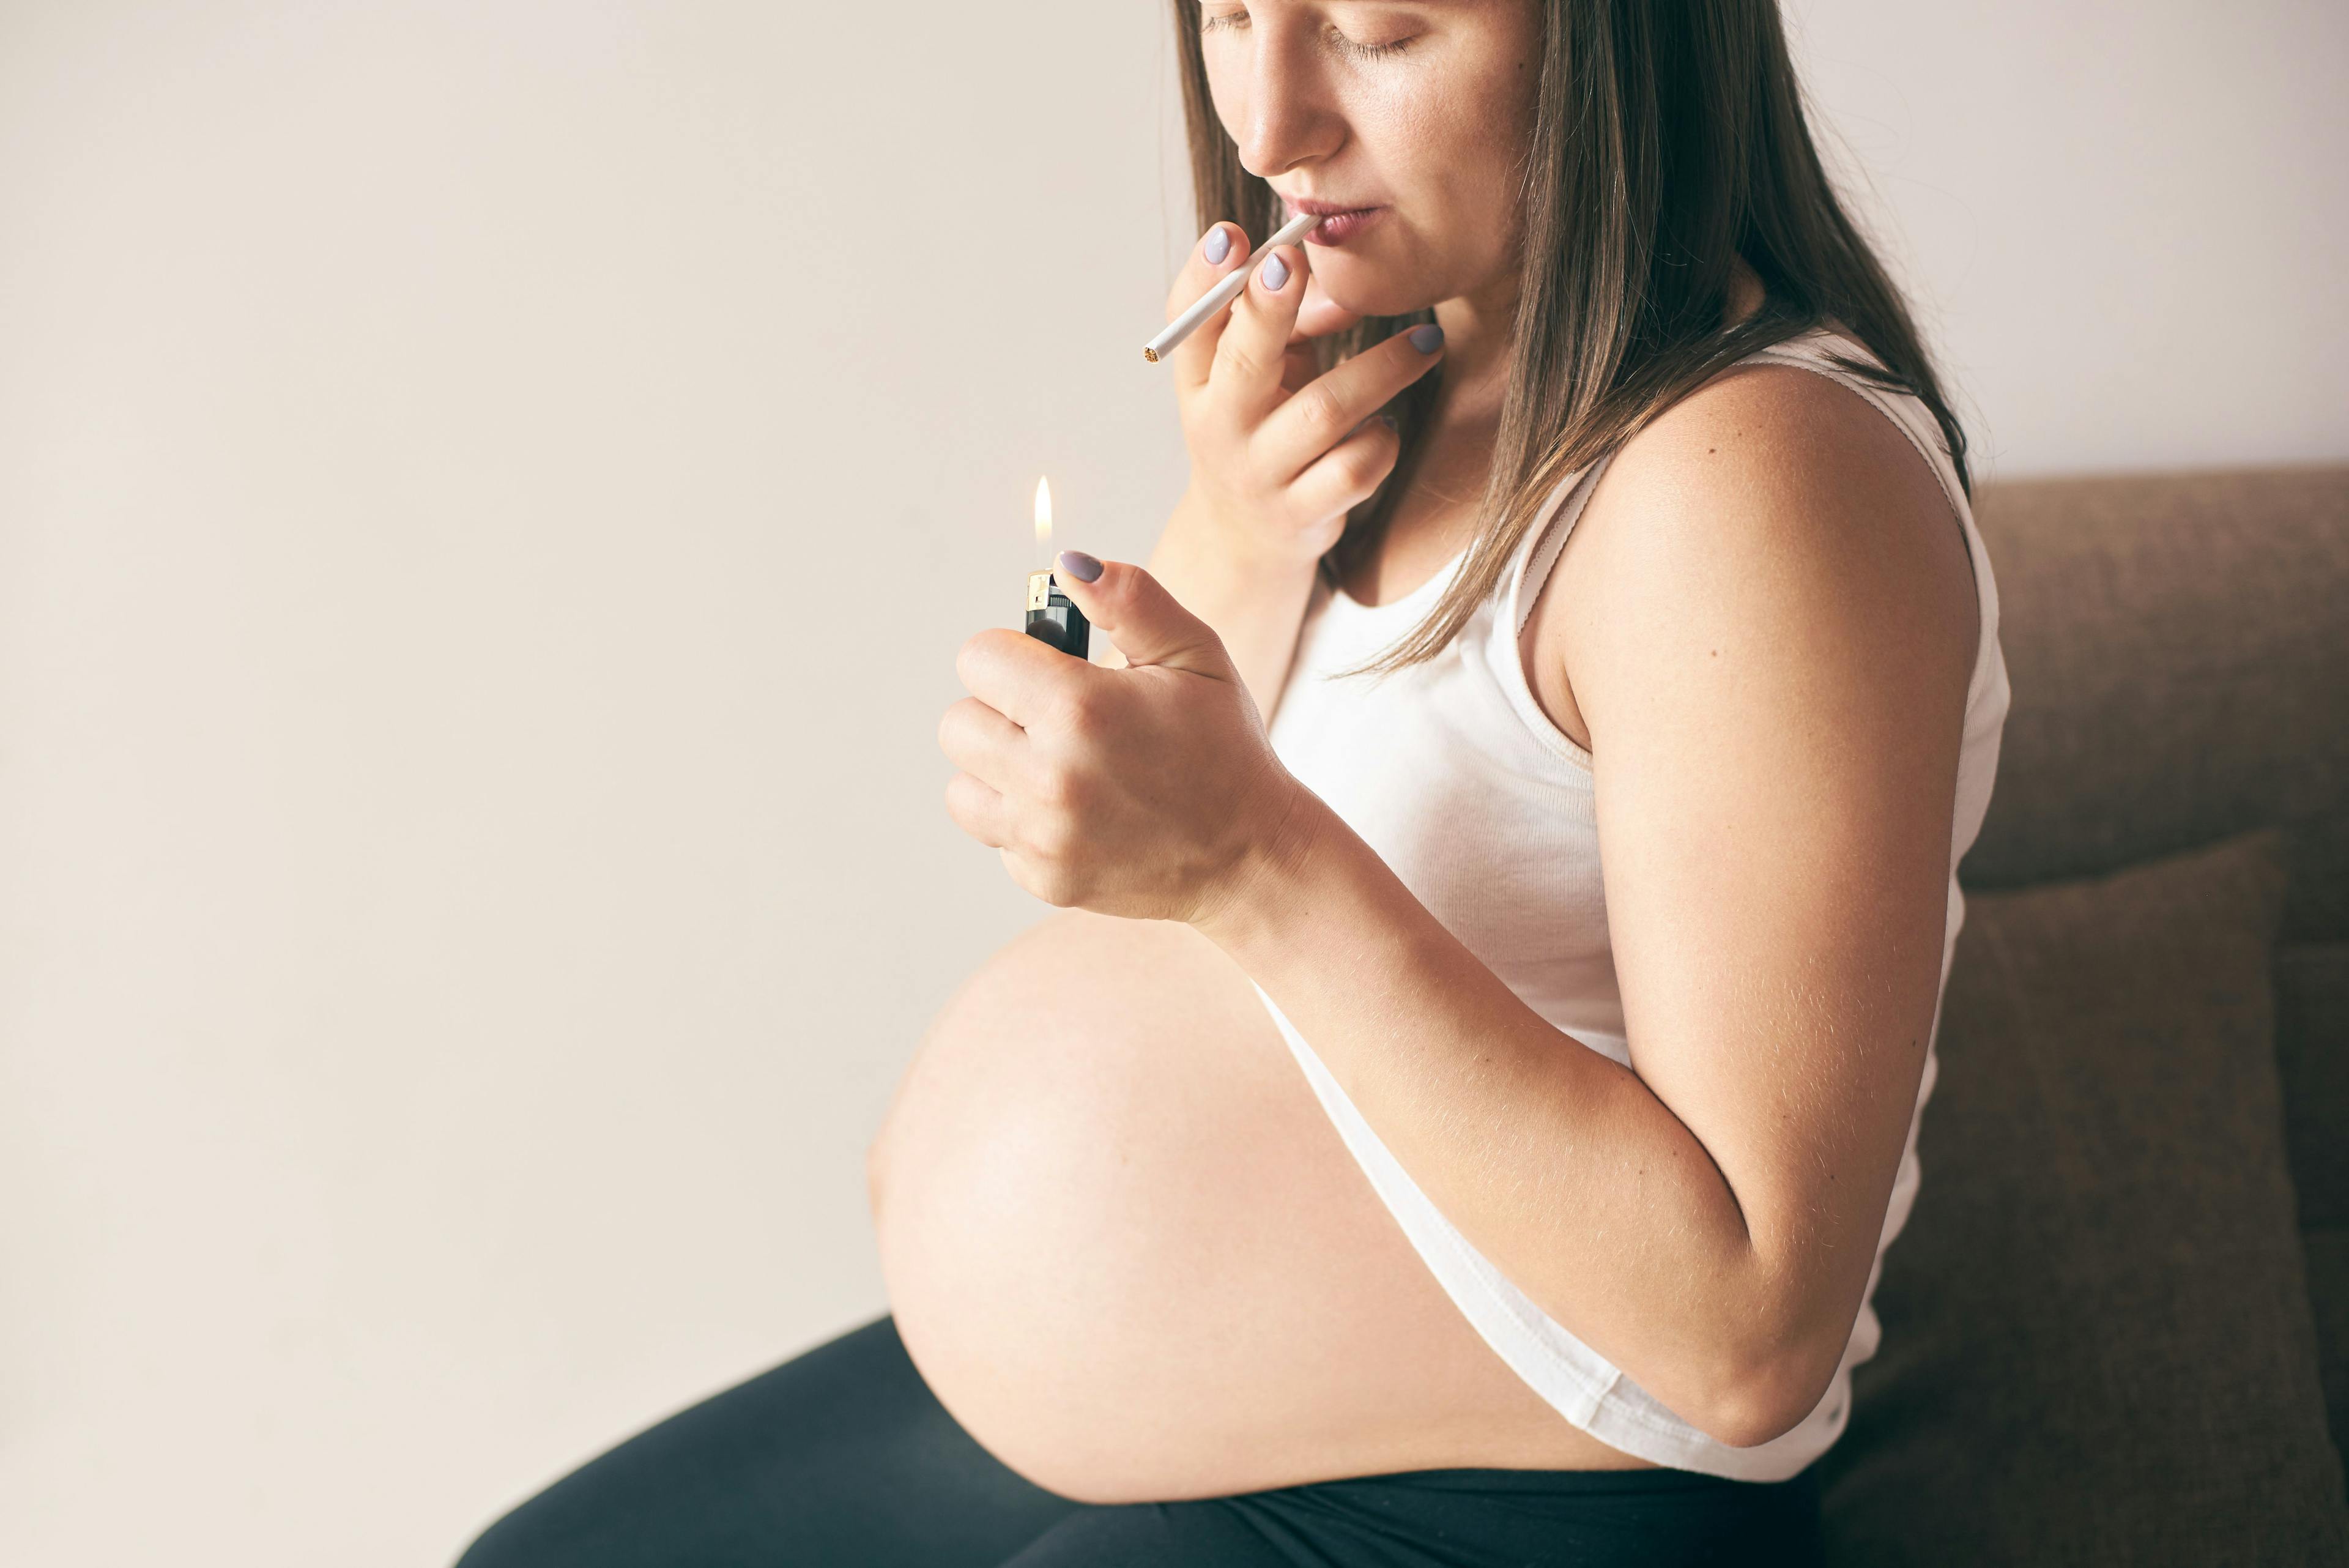 Smoking during pregnancy may be linked to retinoblastoma. (Image credit: Adobe Stock/anatoliy_gleb)